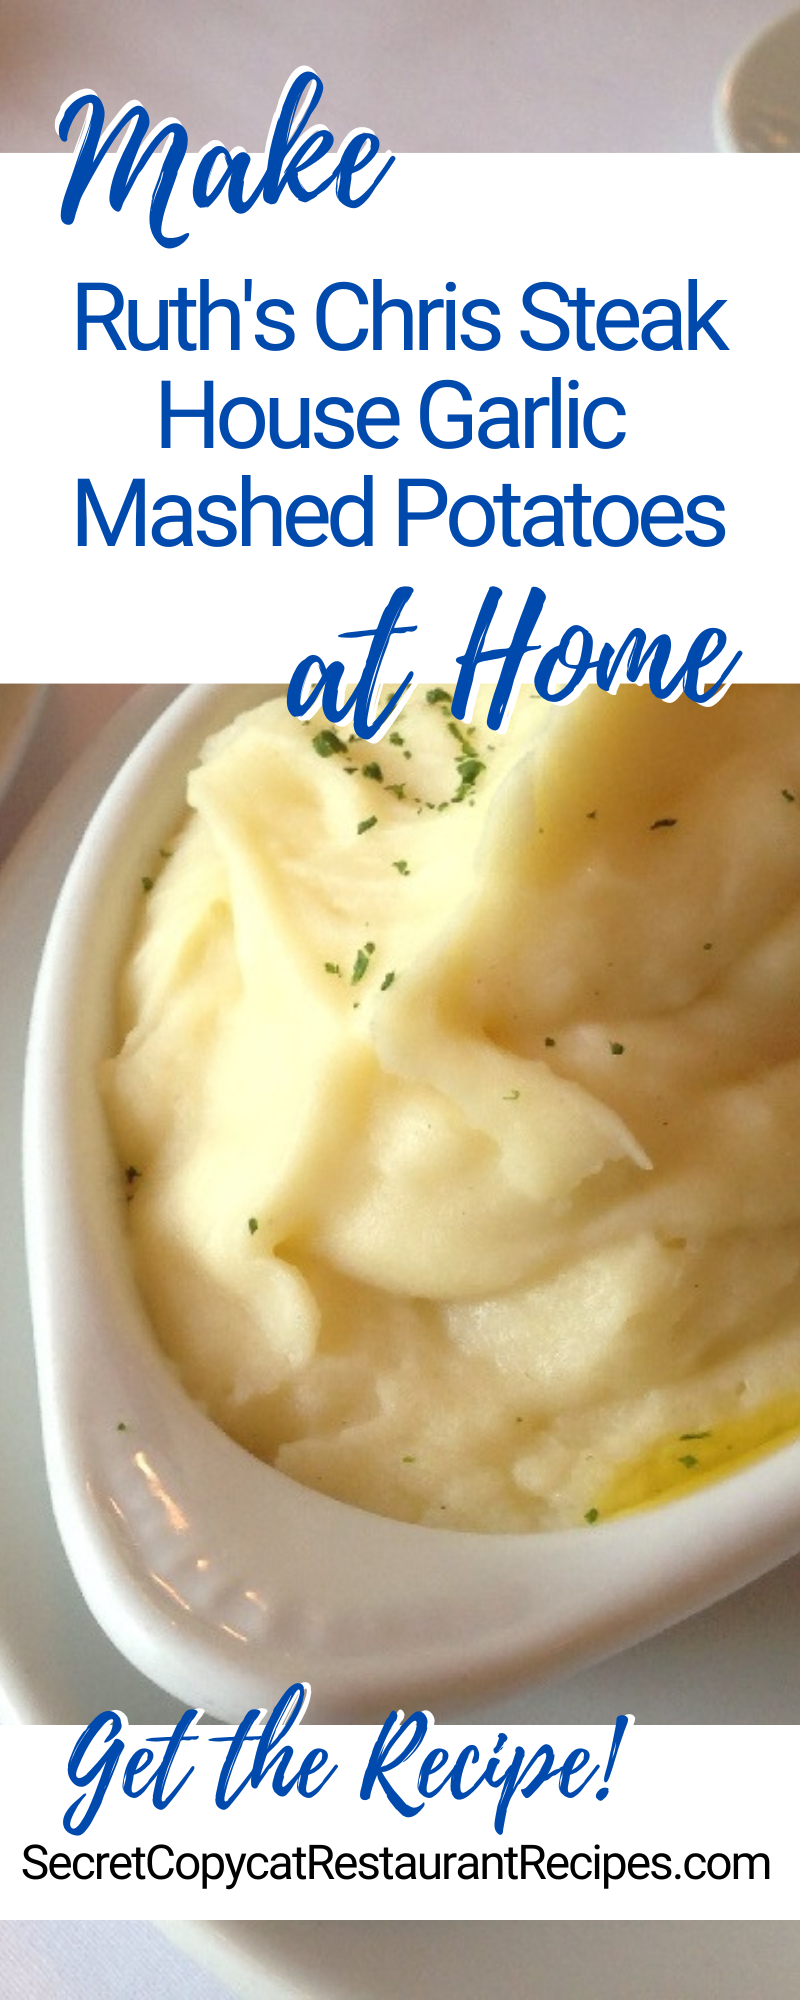 Ruth's Chris Steak House Garlic Mashed Potatoes Recipe